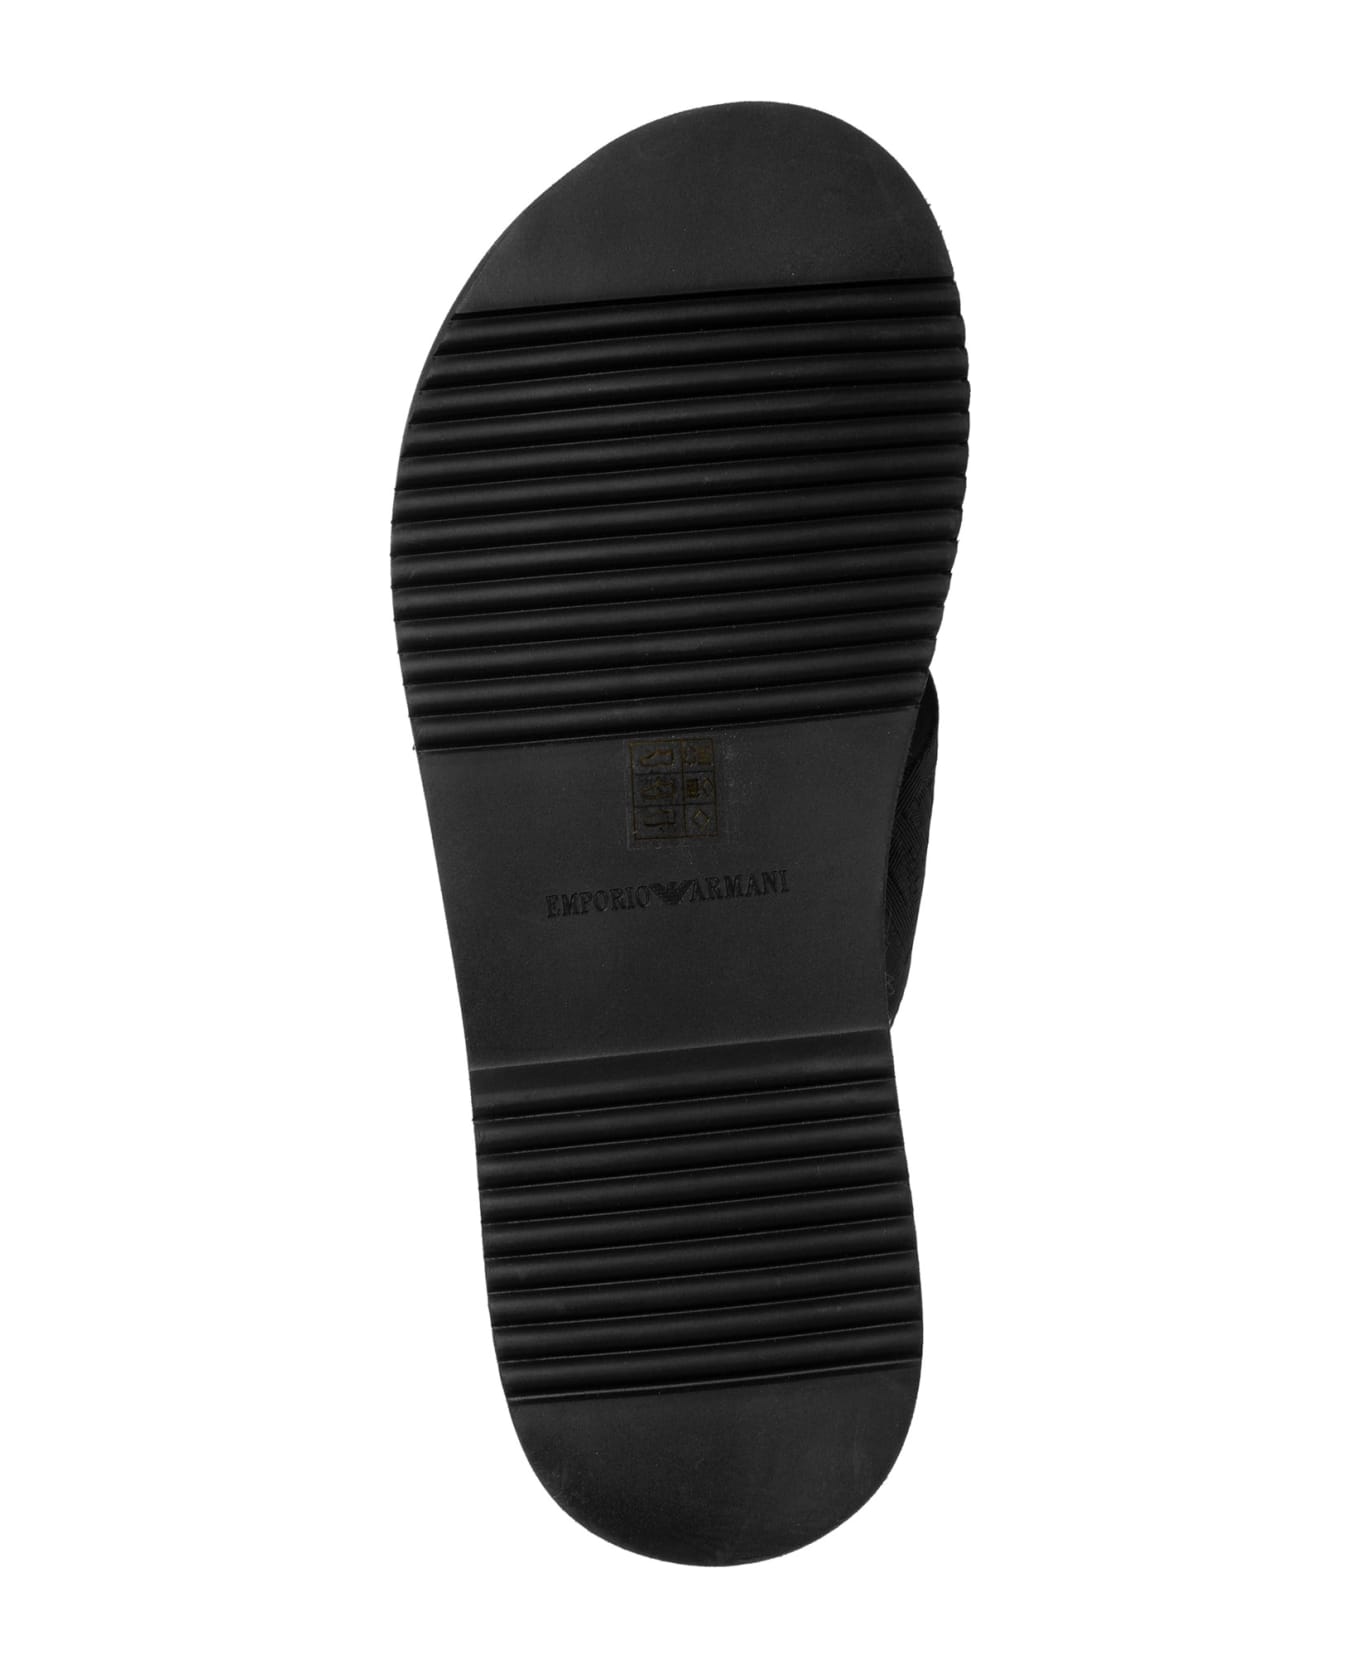 Emporio Armani Leather Sandals - Black その他各種シューズ